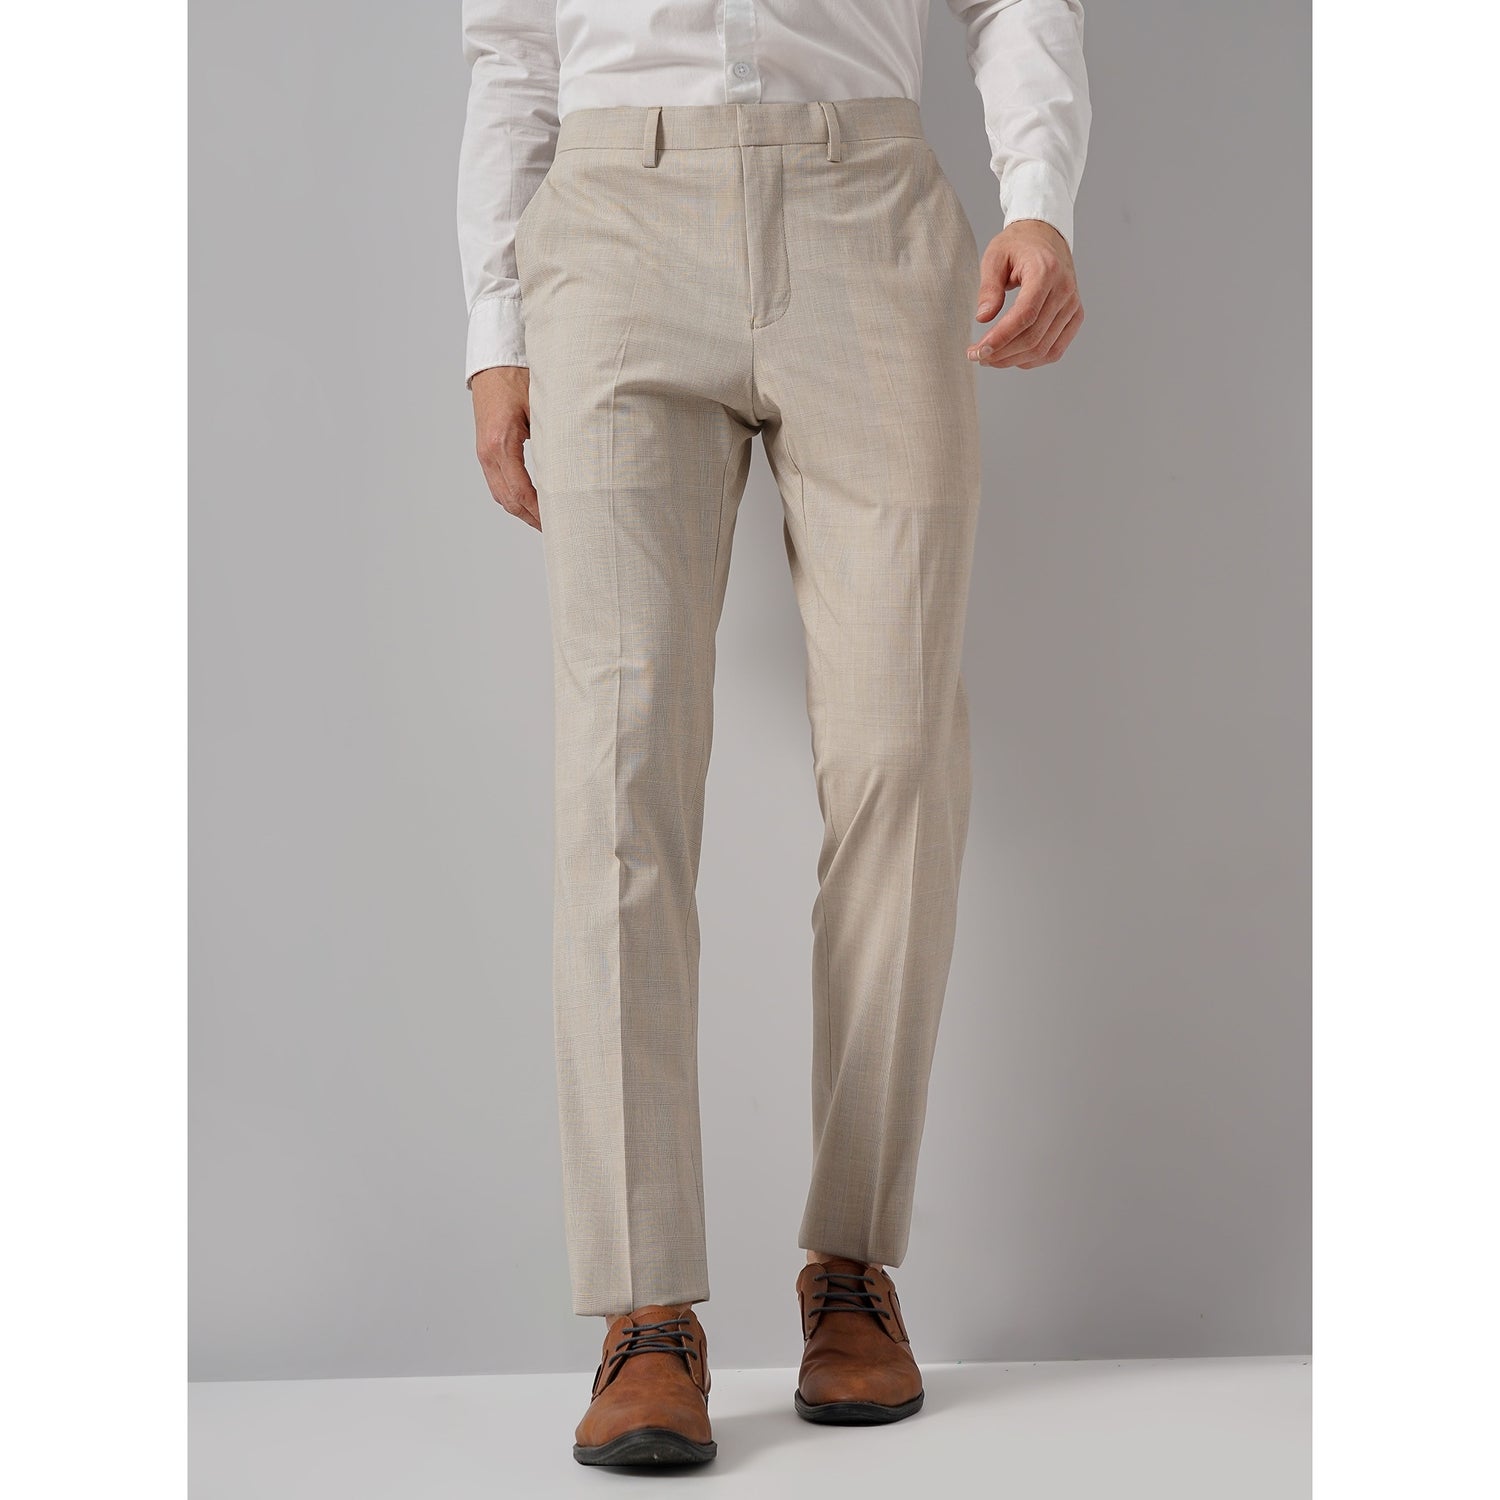 Men Beige Solid Regular Fit Polyester Suit Pants Trouser (GOGABINFUN)